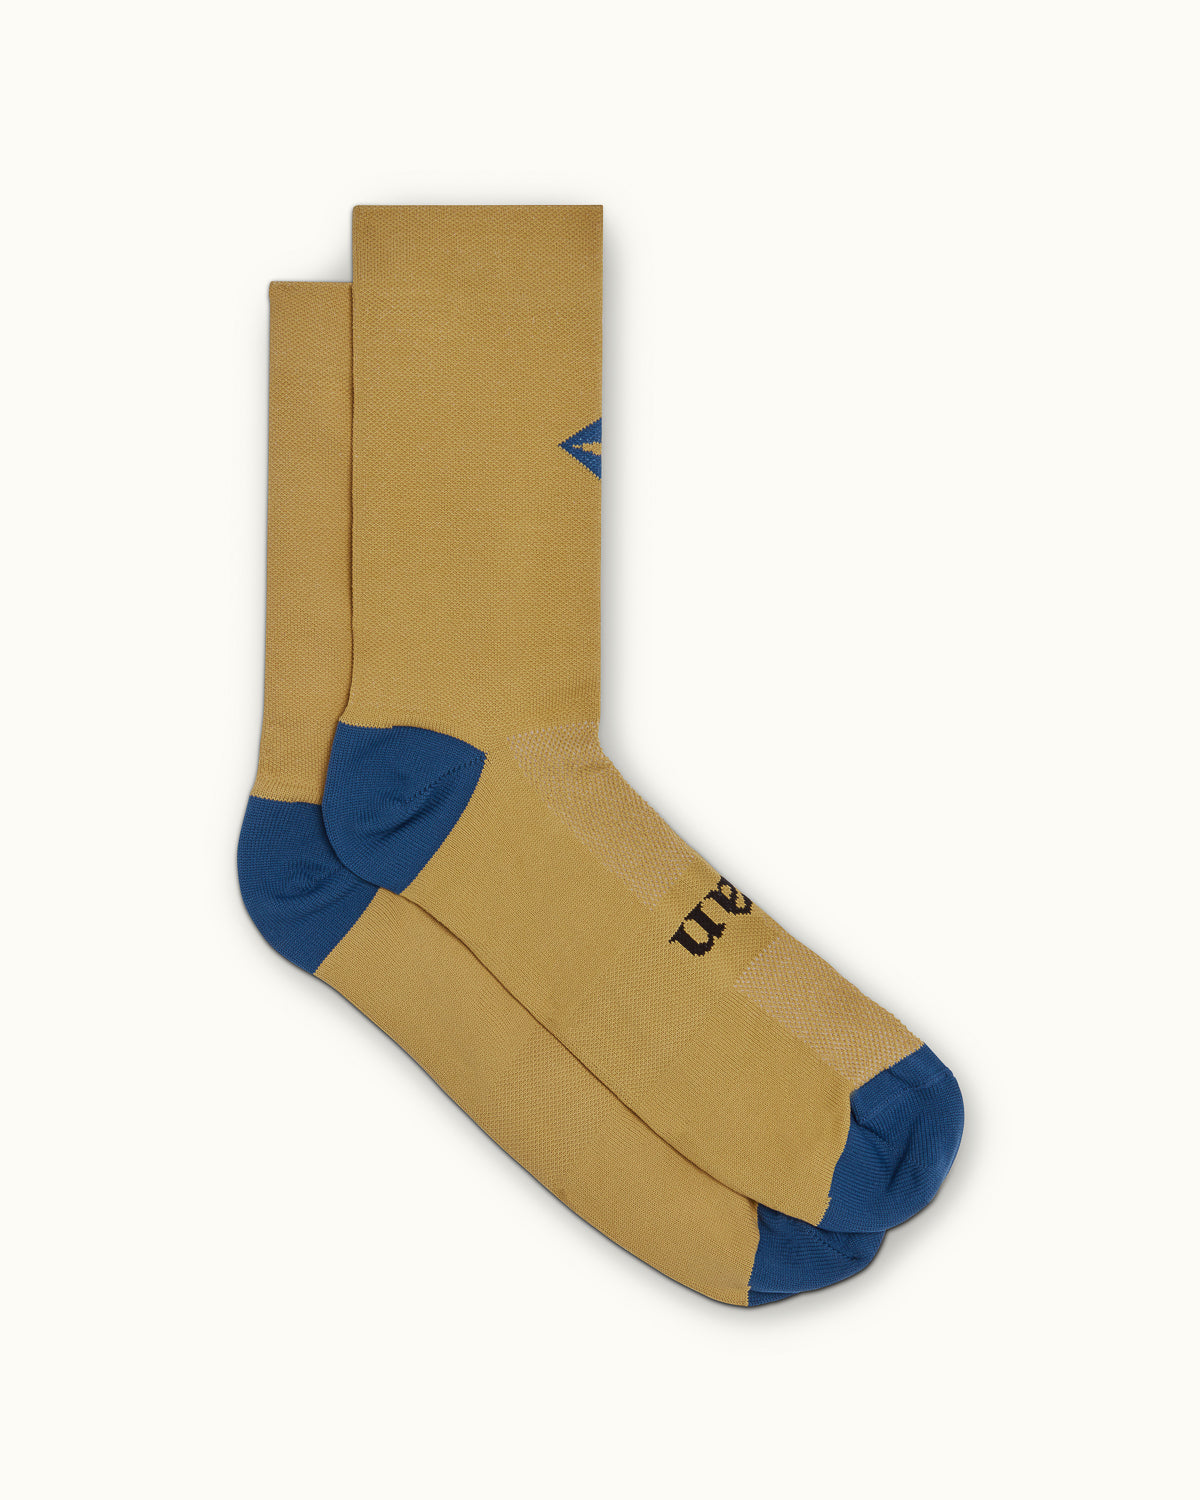 Pathfinder Socks - Tan